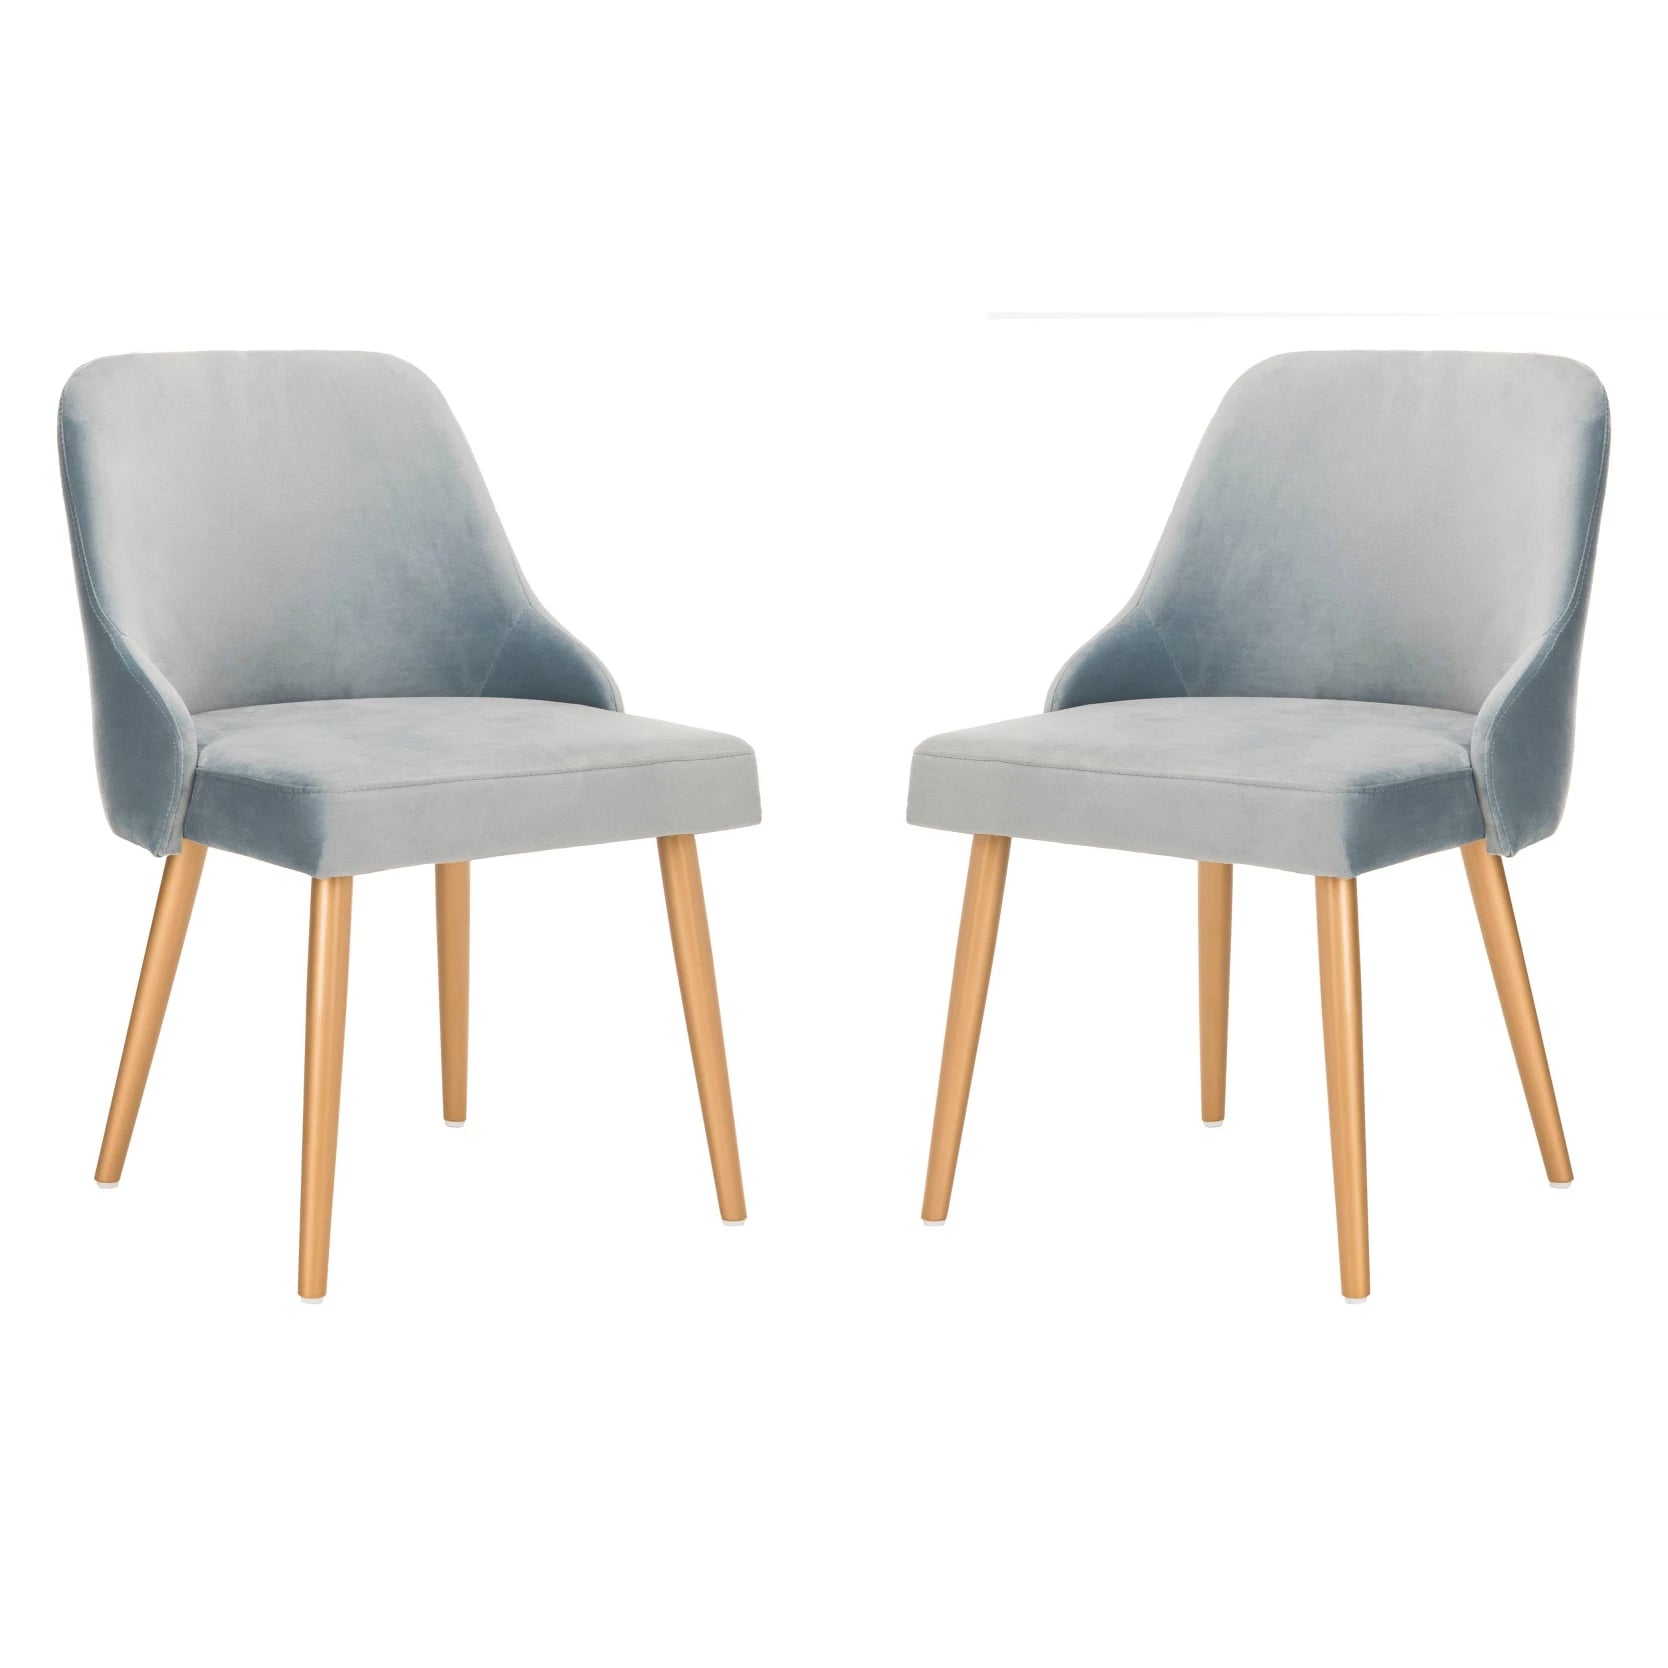 Safavieh Set of 2 Lulu Upholstered Chairs